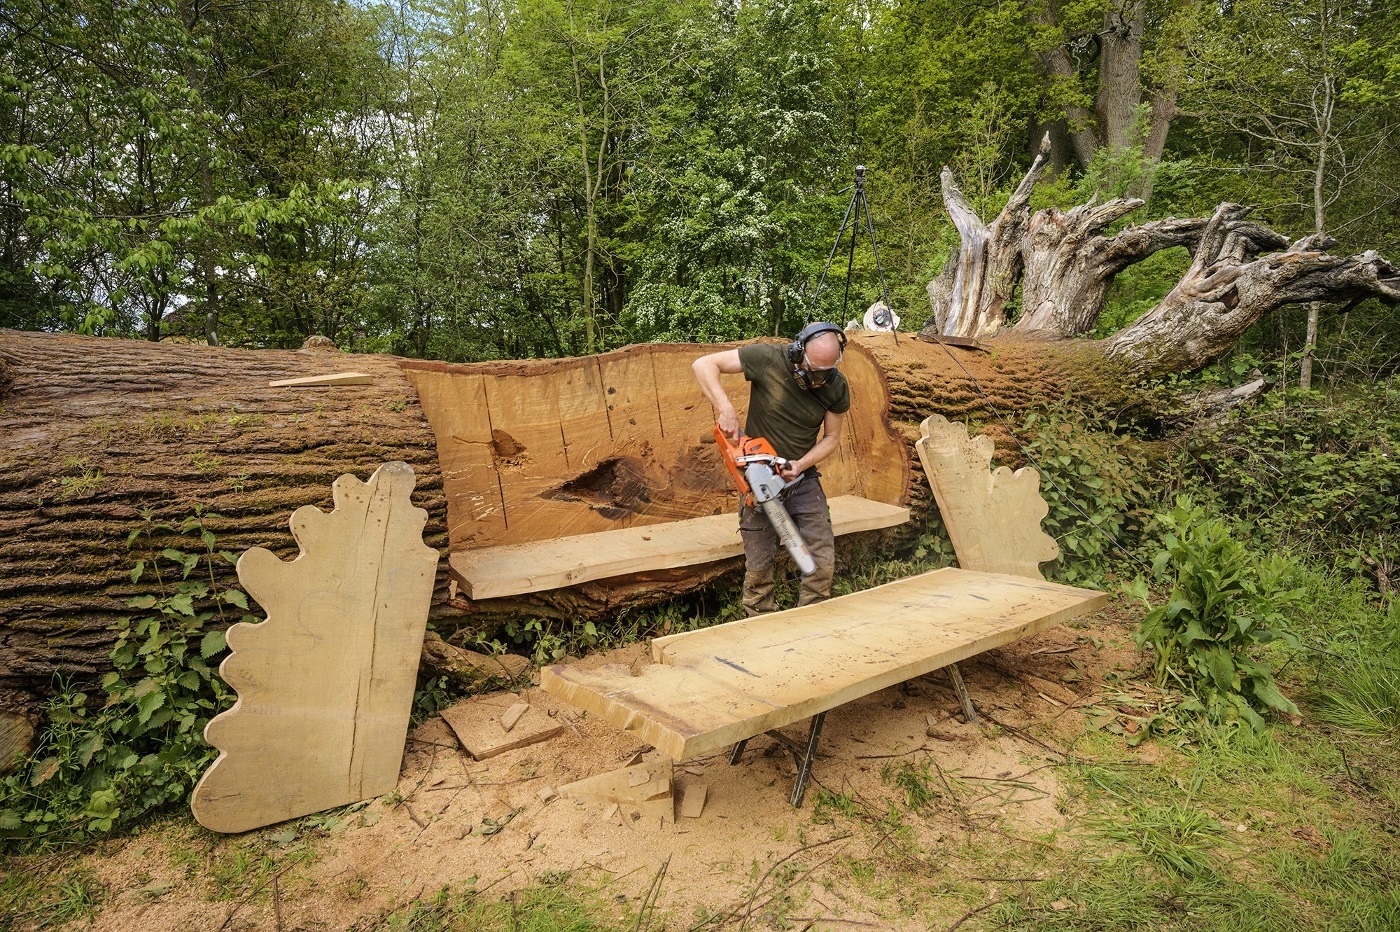 Champion chainsaw artist Matthew Crabb at work on the fallen oak tree in High Park on the Blenheim estate. Picture: Pete Seaward